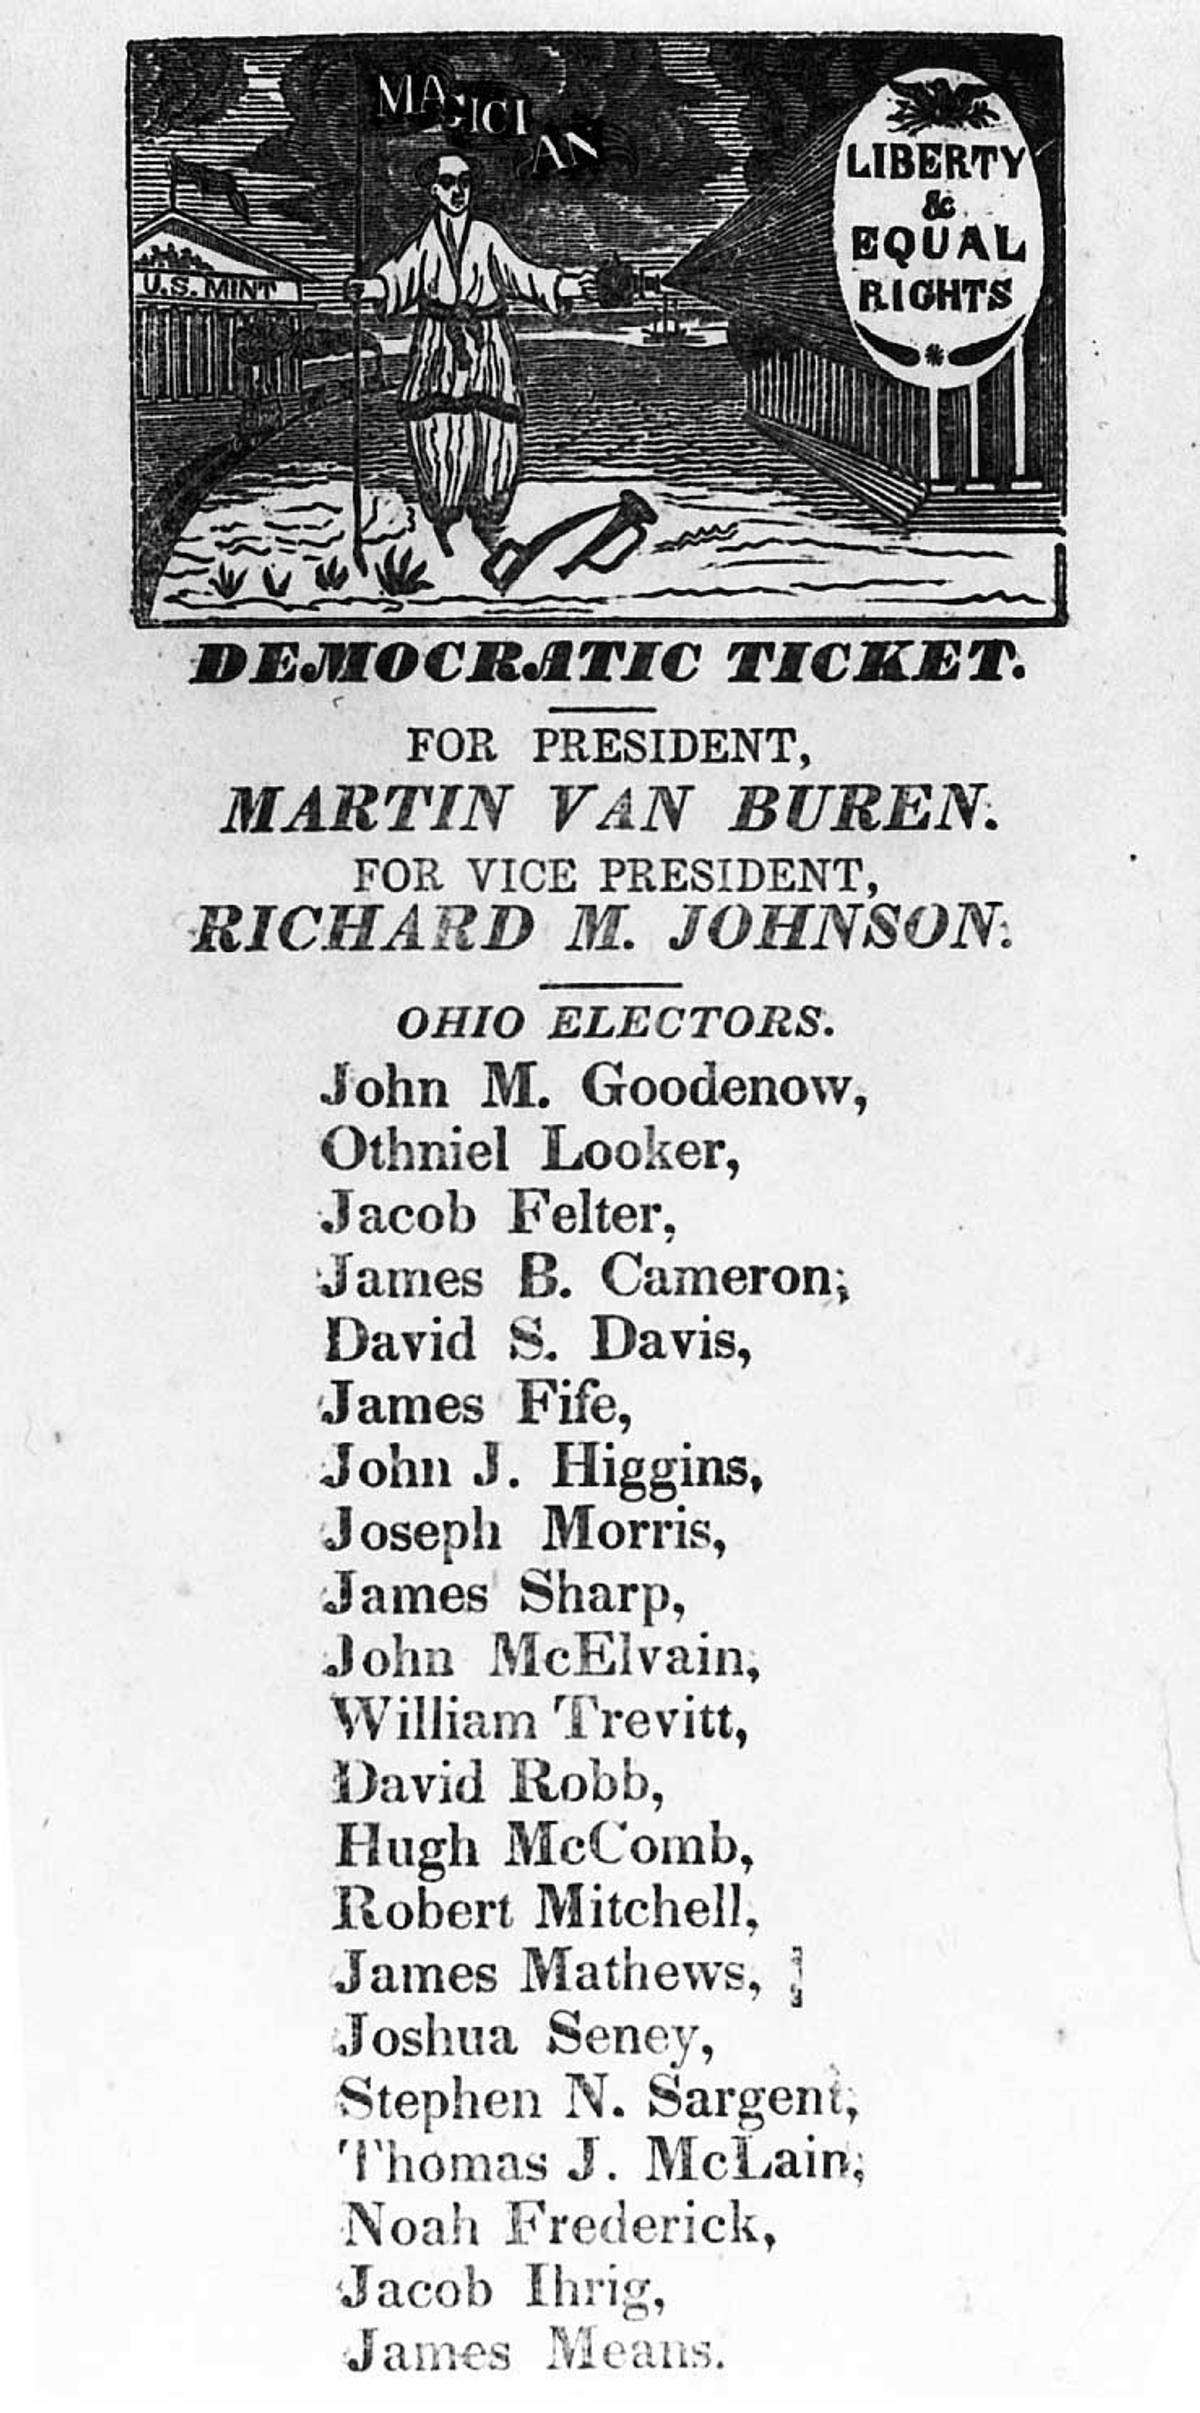 Democratic ticket, 1836